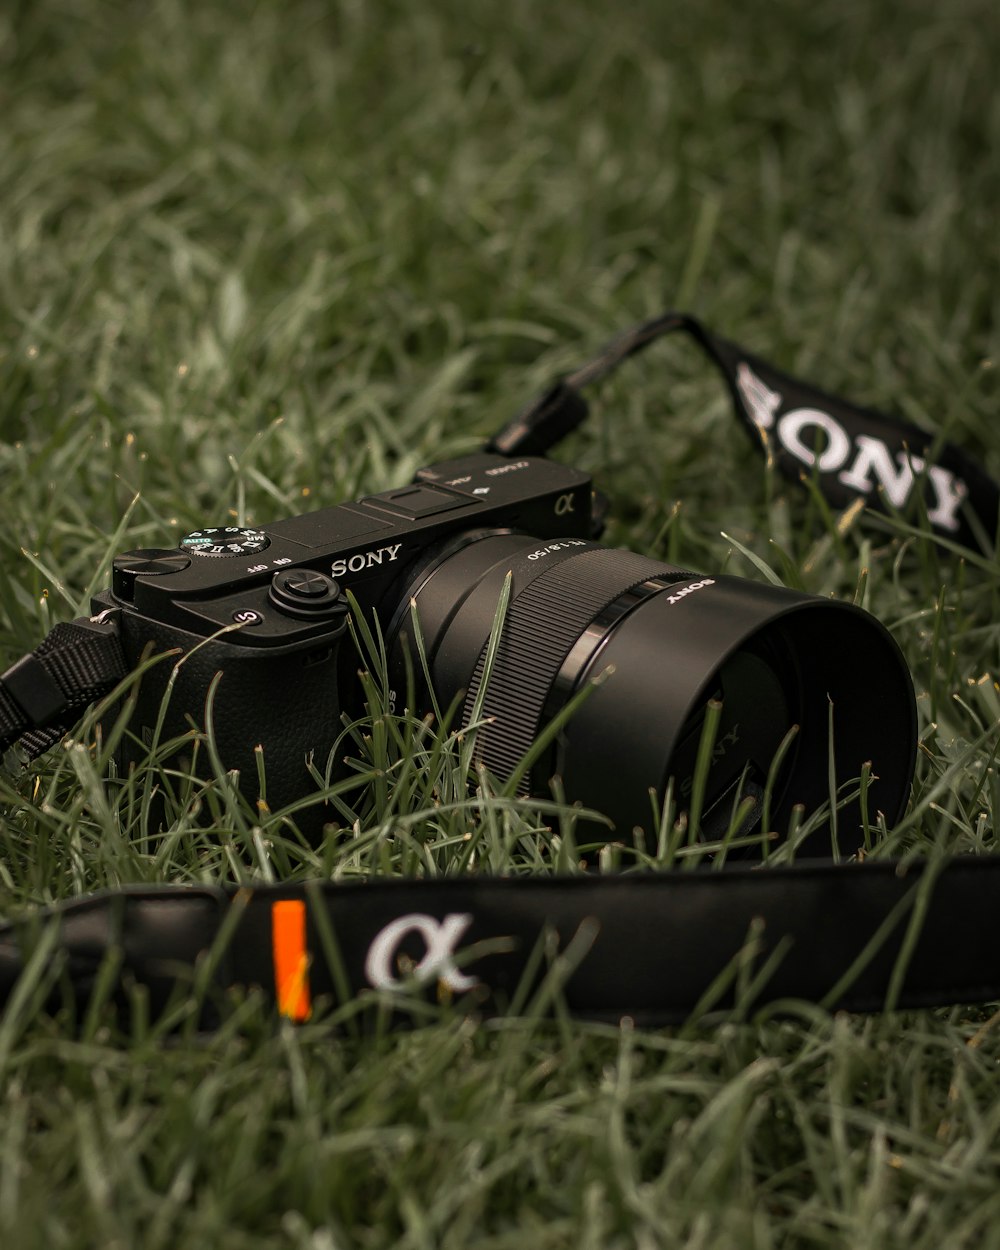 Schwarze Nikon DSLR-Kamera auf grünem Gras